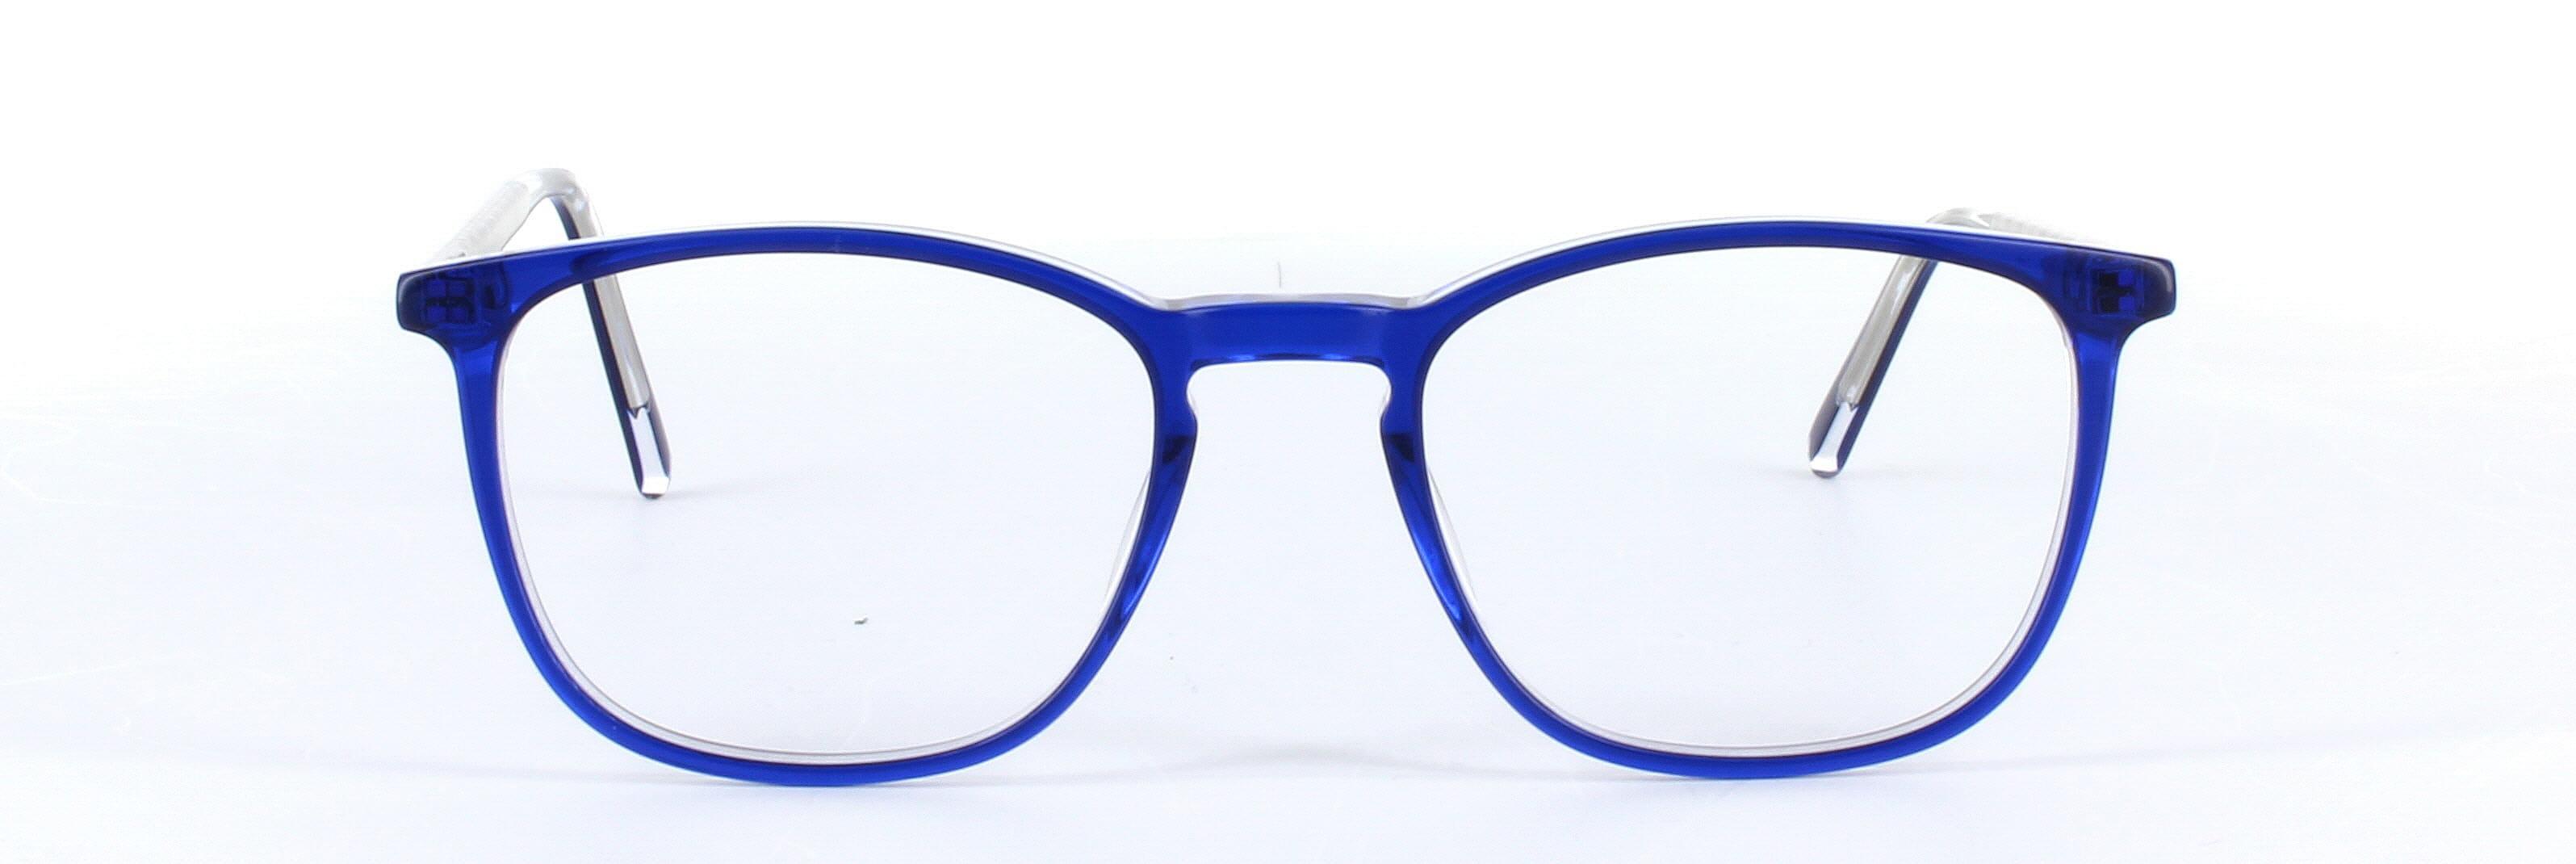 Mariana Blue Full Rim Round Plastic Glasses - Image View 5